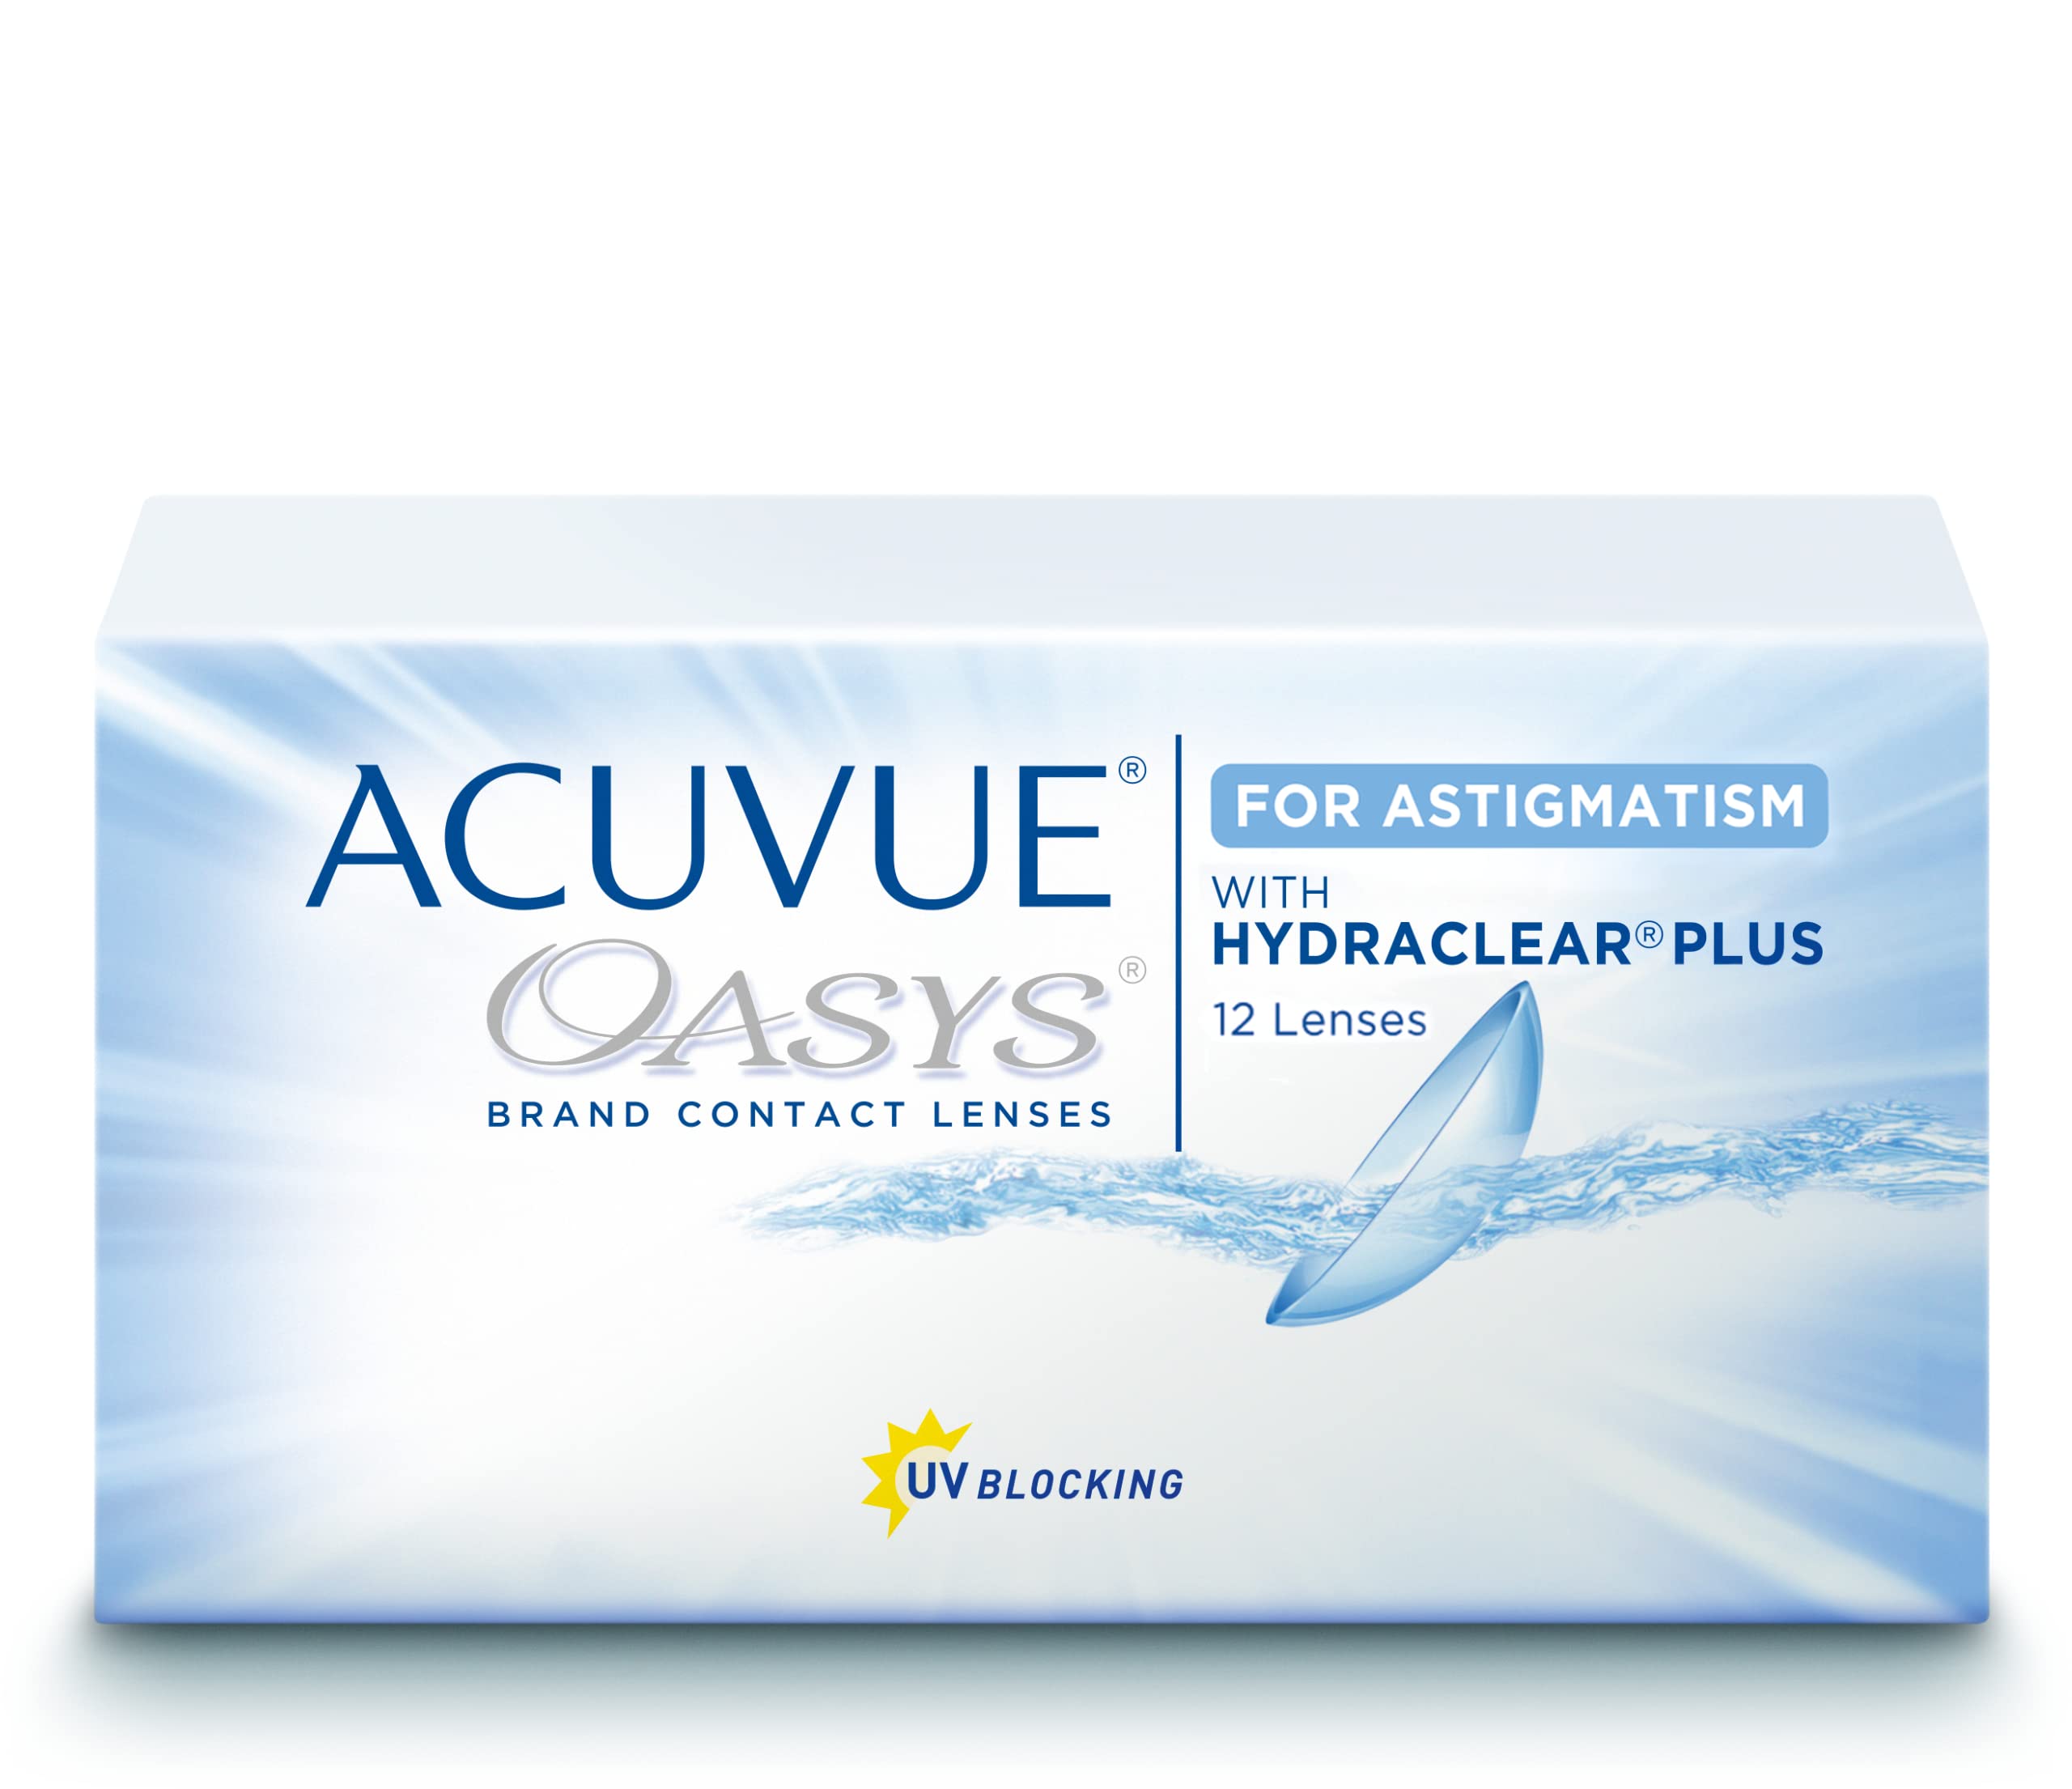 Acuvue Oasys for Astigmatism 2-Wochenlinsen weich, 12 Stück/BC 8.6 mm/DIA 14.5 / CYL -2.75 / Achse 50 / -4.75 Dioptrien